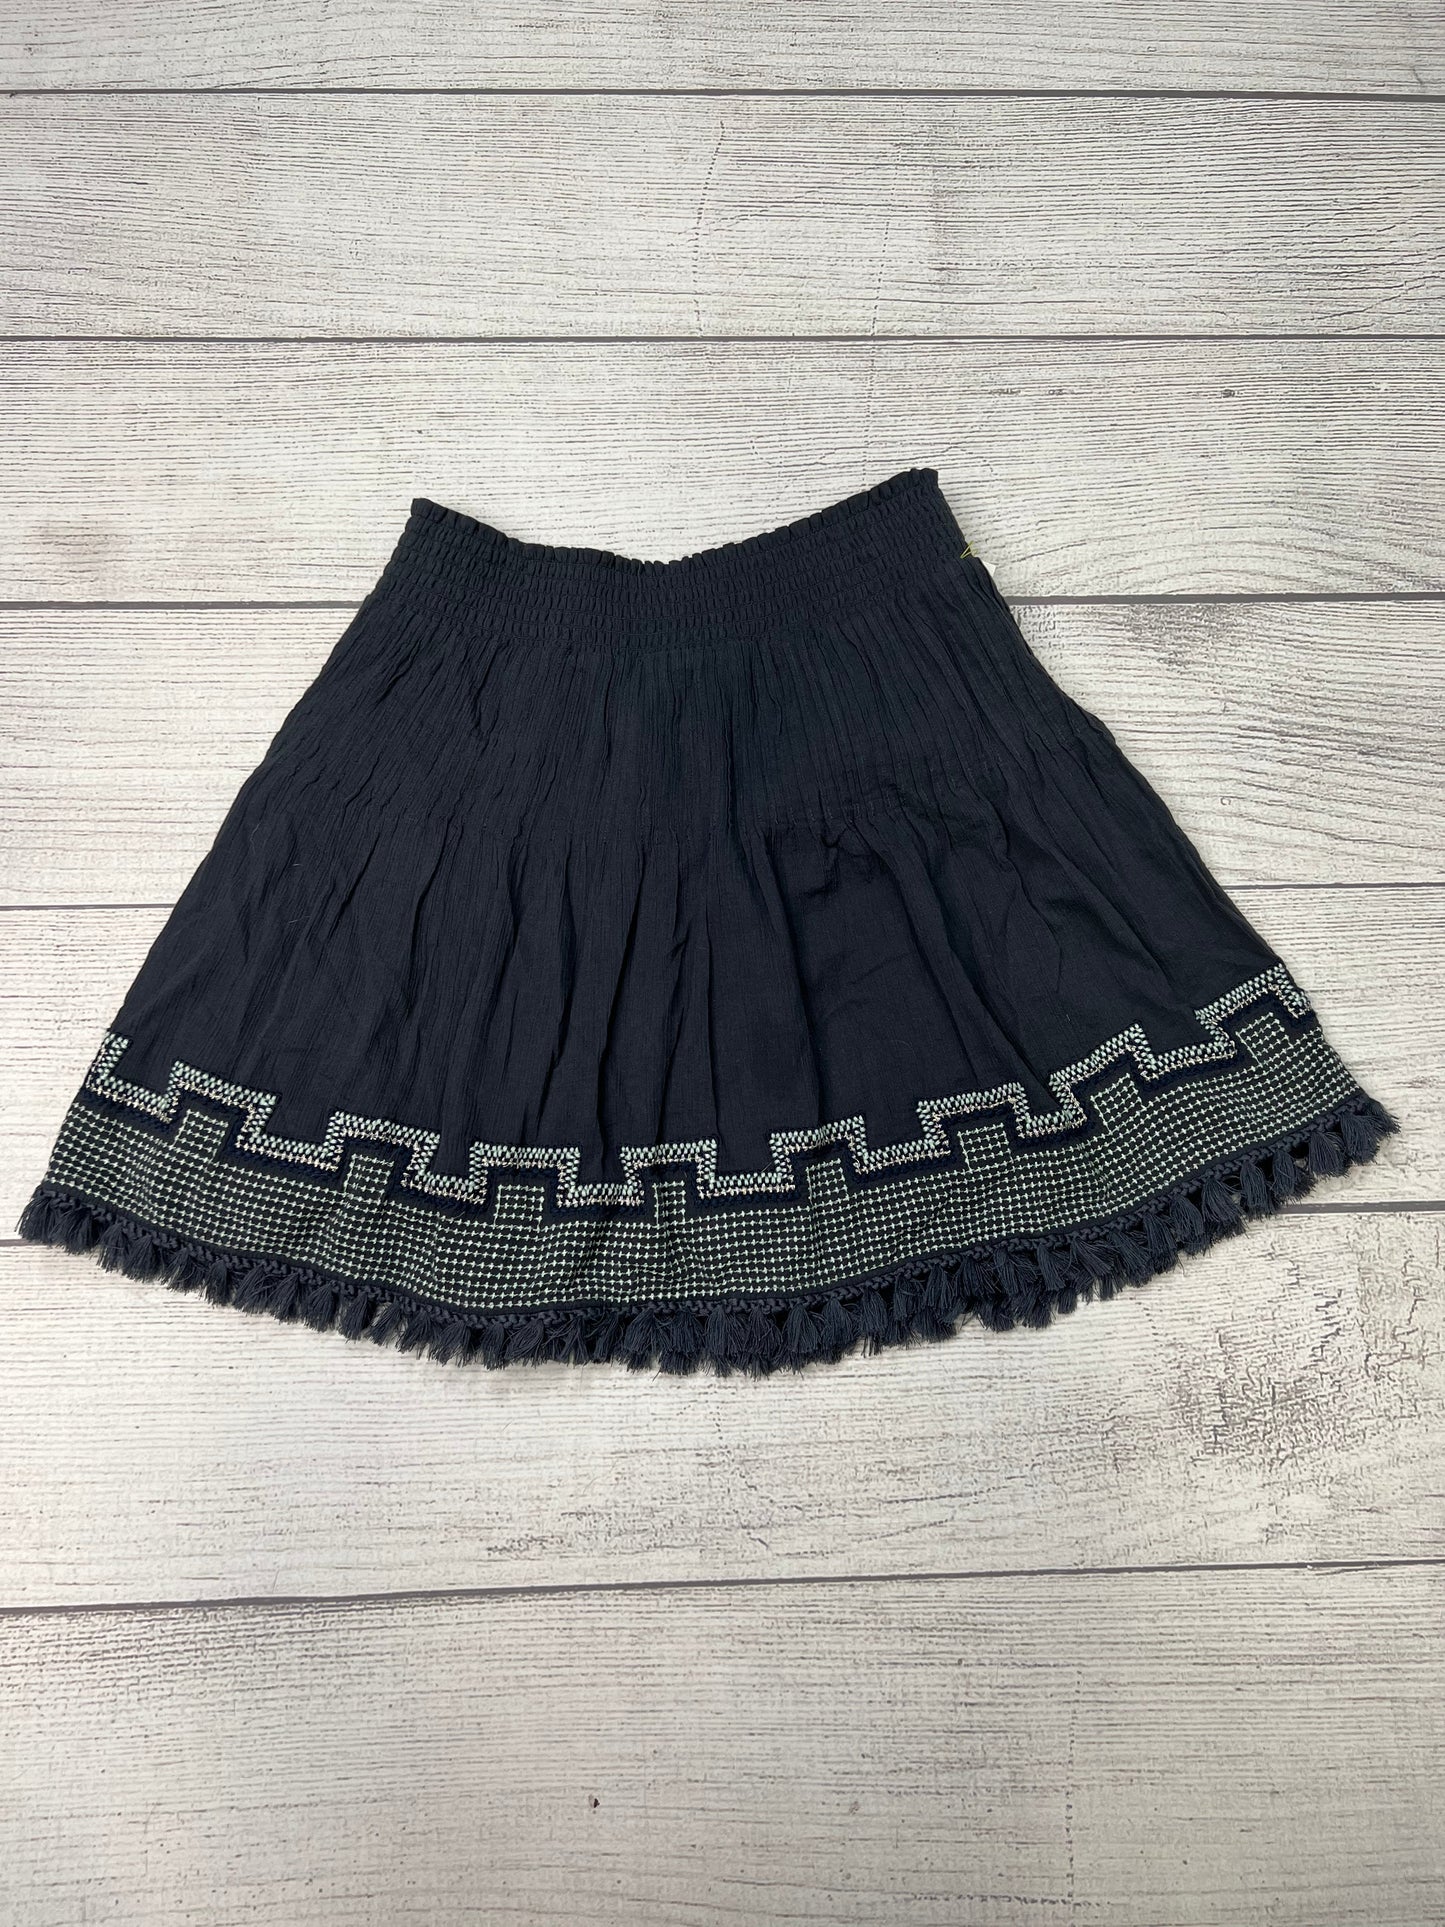 Denim Skirt Maxi Inc, Size 6